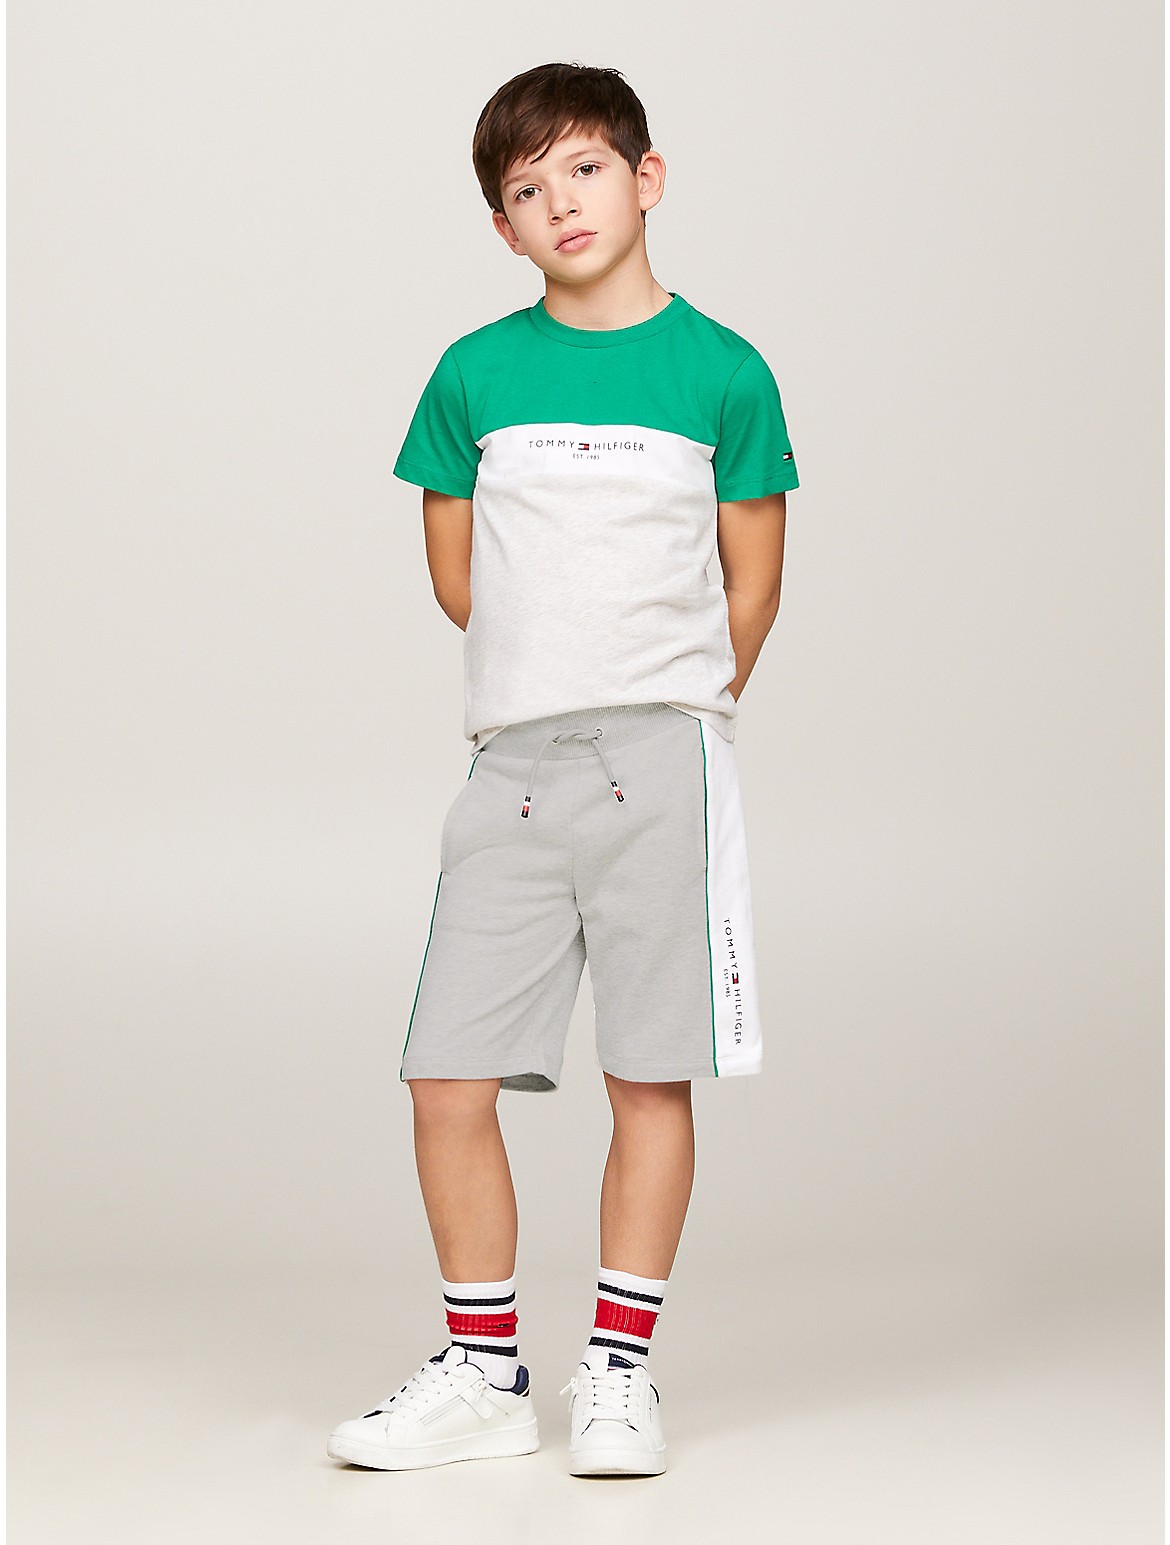 Tommy Hilfiger Boys' Kids' Colorblock T-Shirt and Short Set - Green - 10